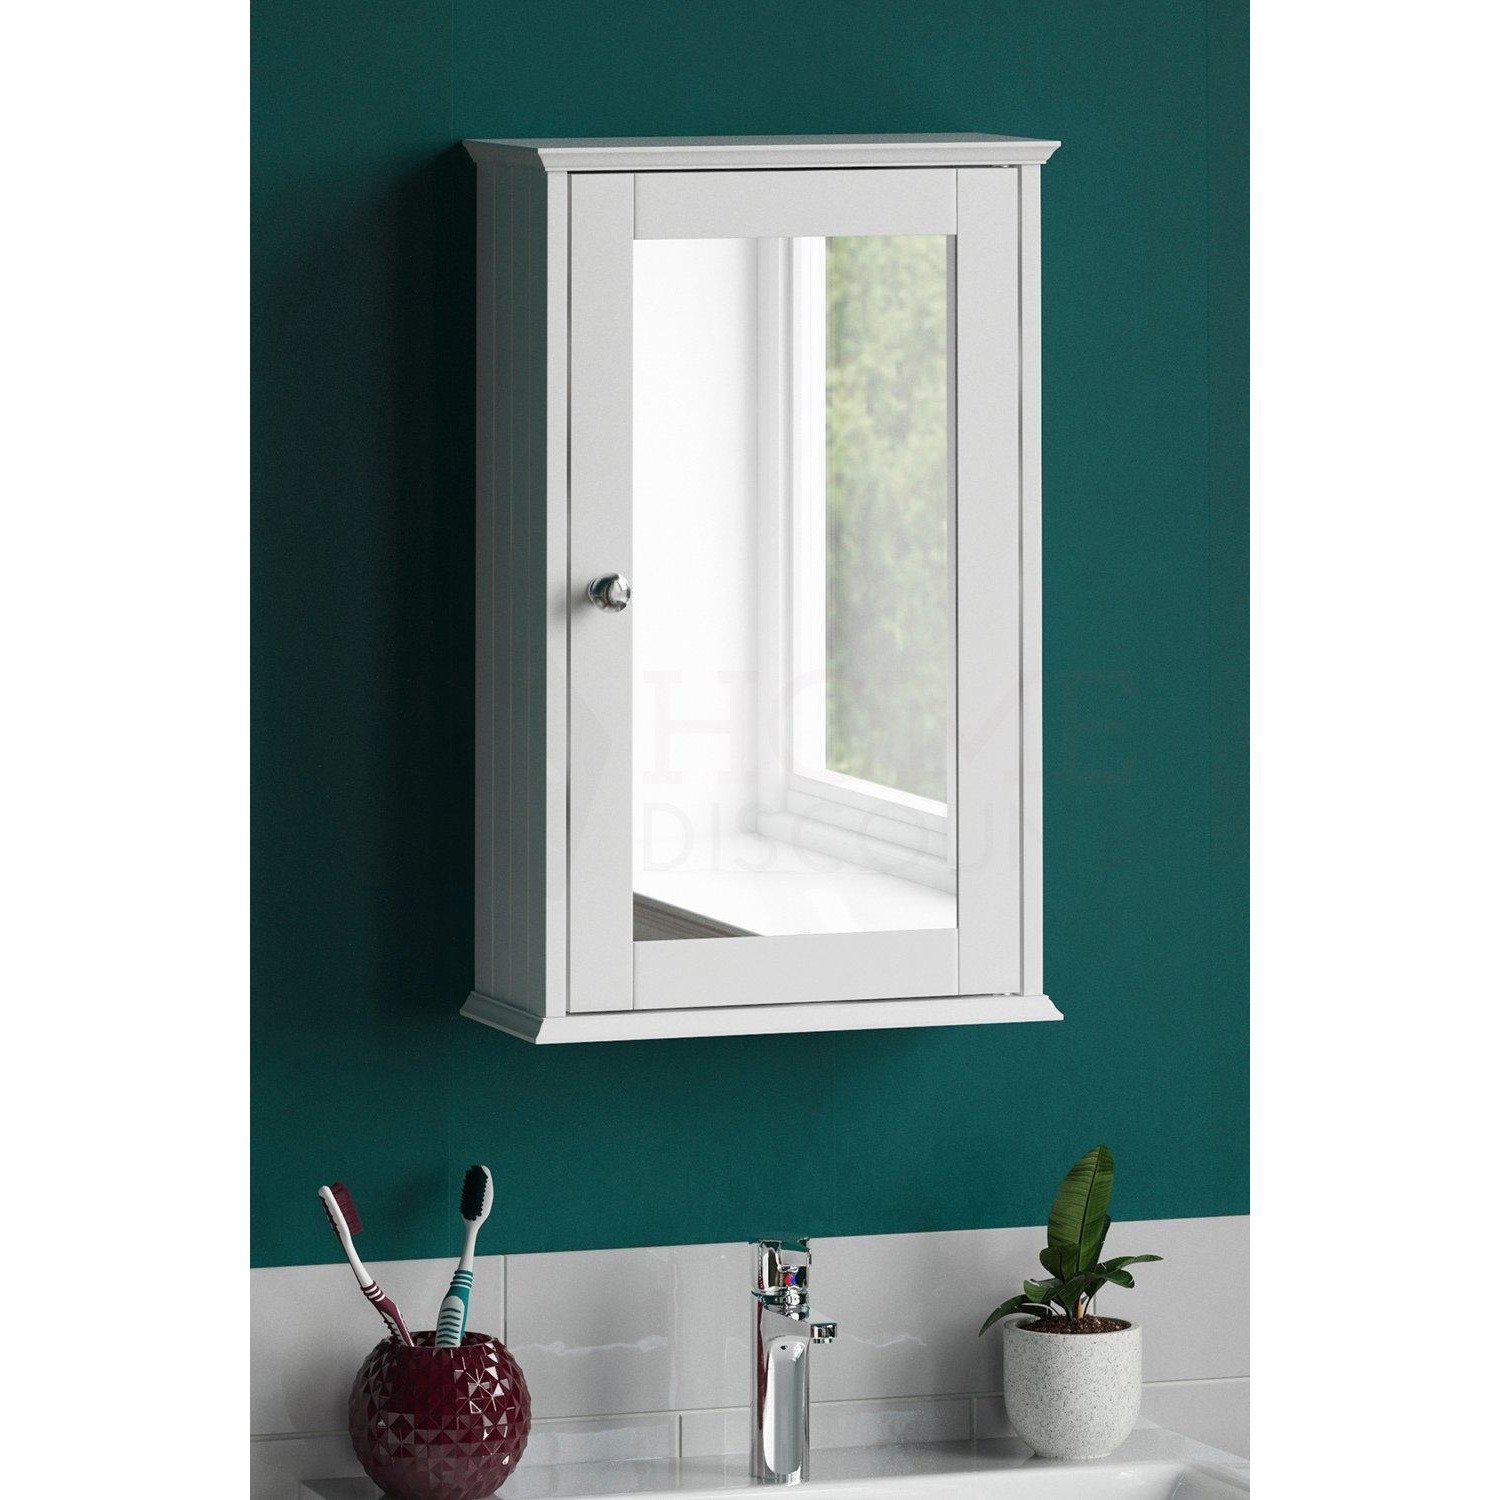 Bath Vida Priano 1 Door Mirrored Wall Cabinet With Shelf Storage Bathroom Furniture 530 x 340 x 150 mm - image 1